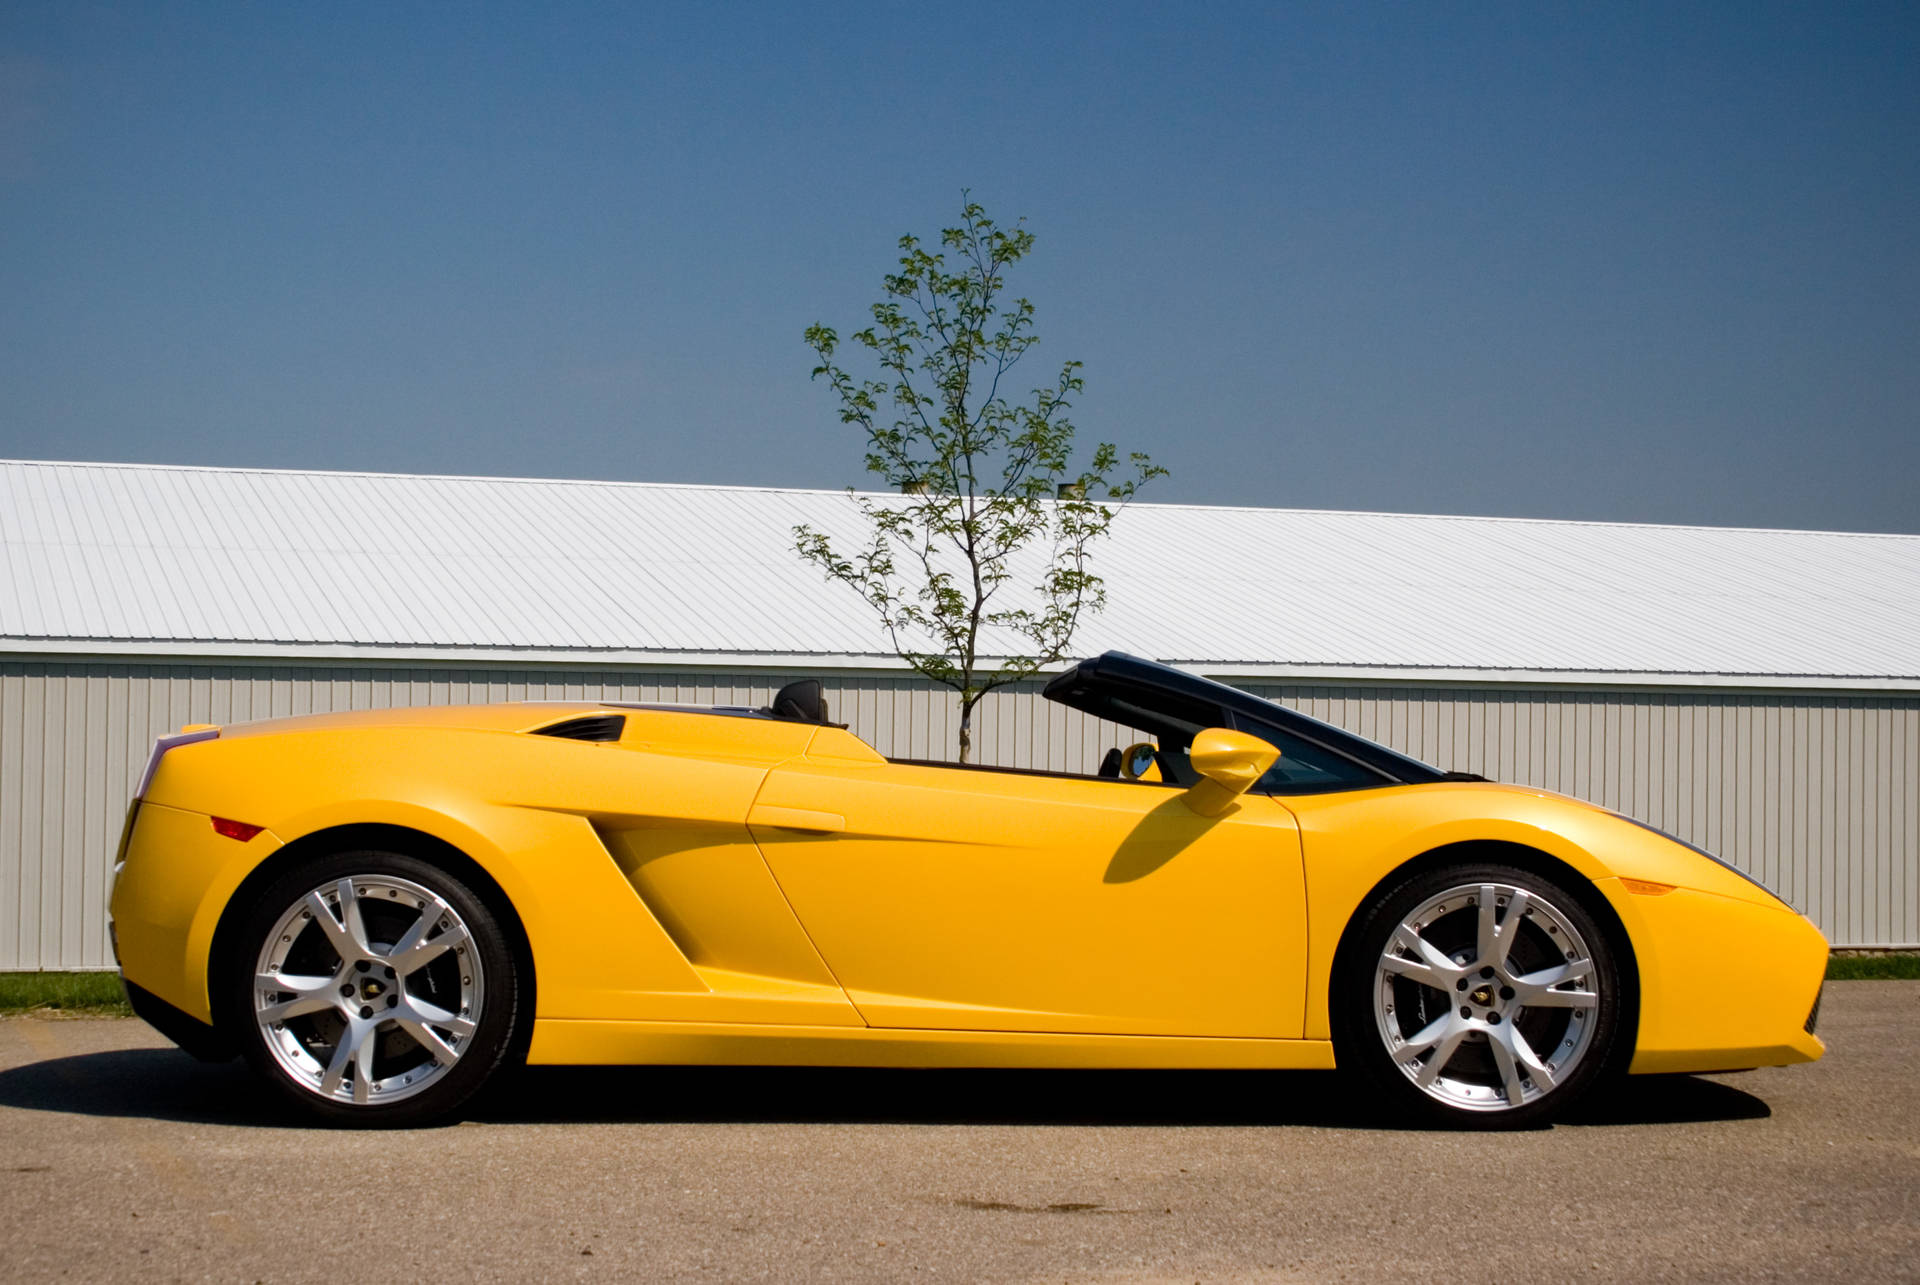 4K Lamborghini Gallardo i gul maling fokuserer på sporty elegance. Wallpaper